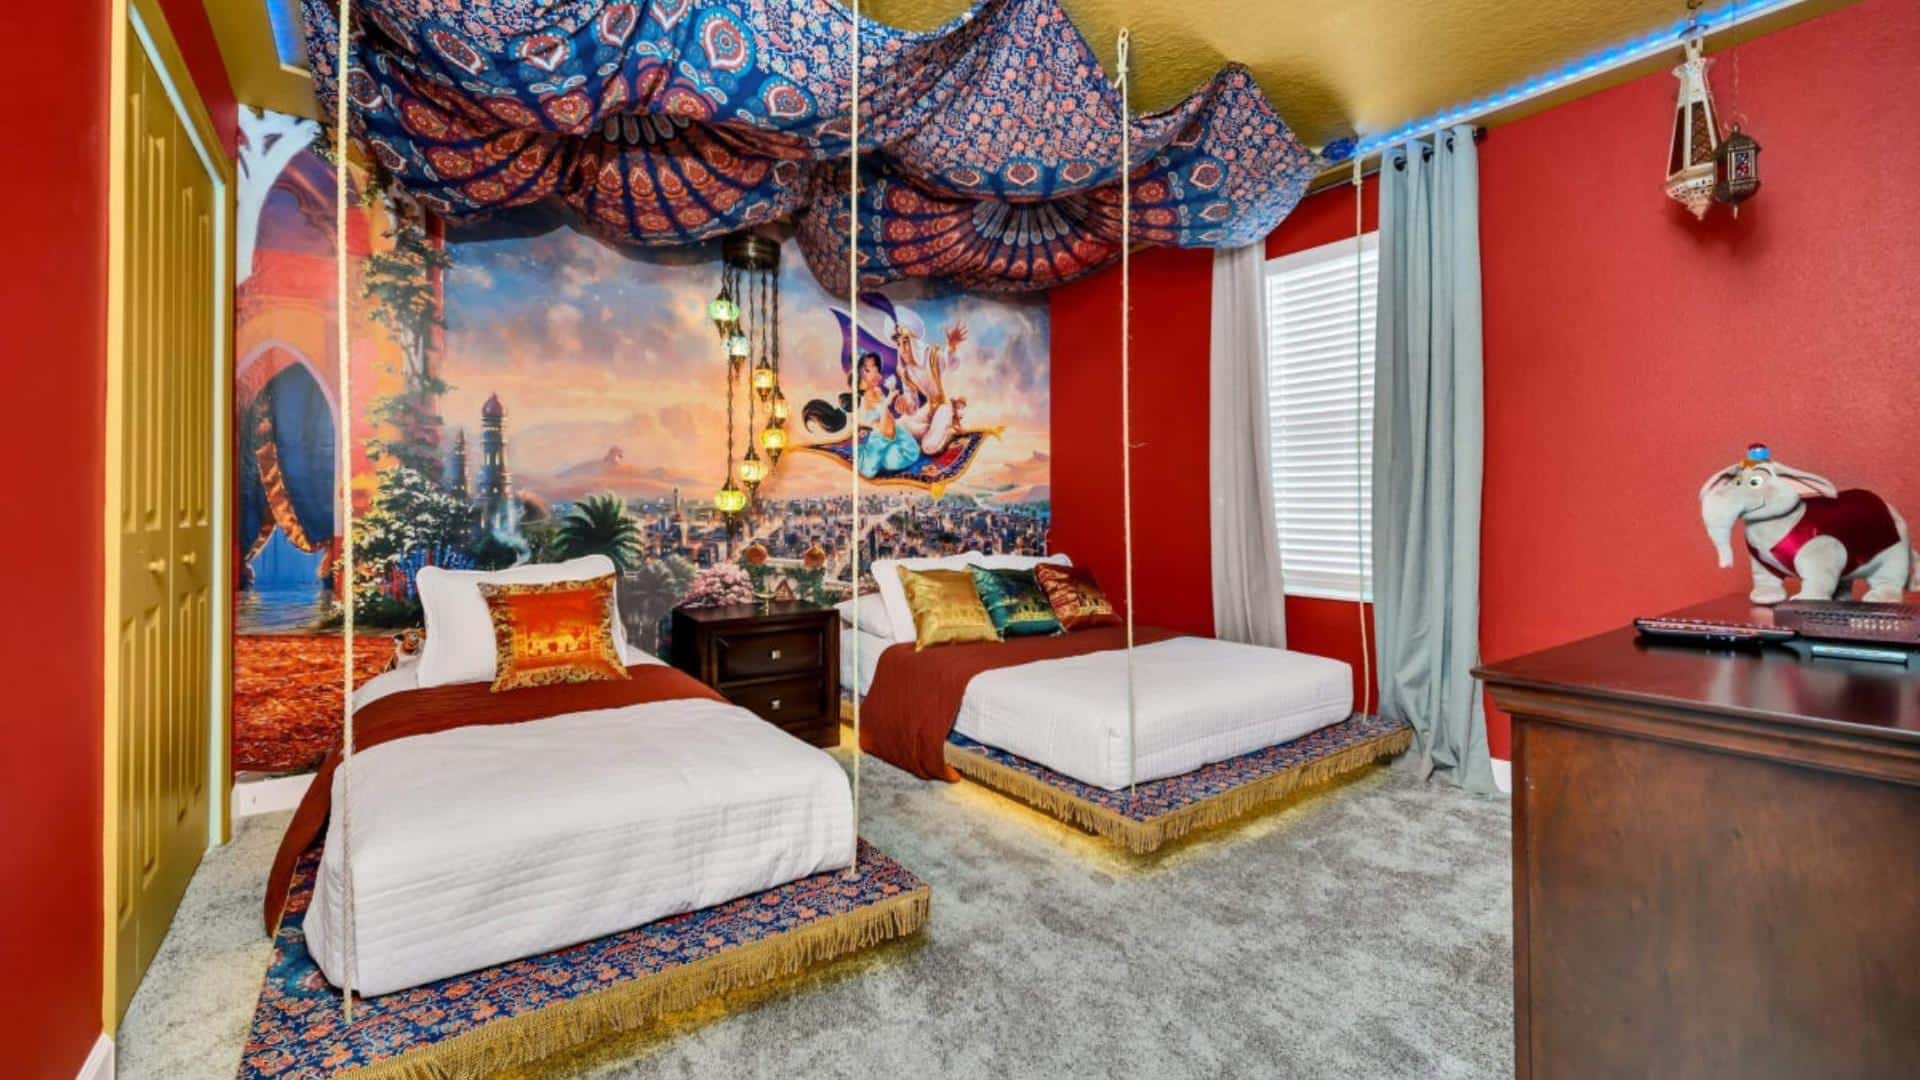 Orlando Aladdin Themed Bedroom Vacation Home